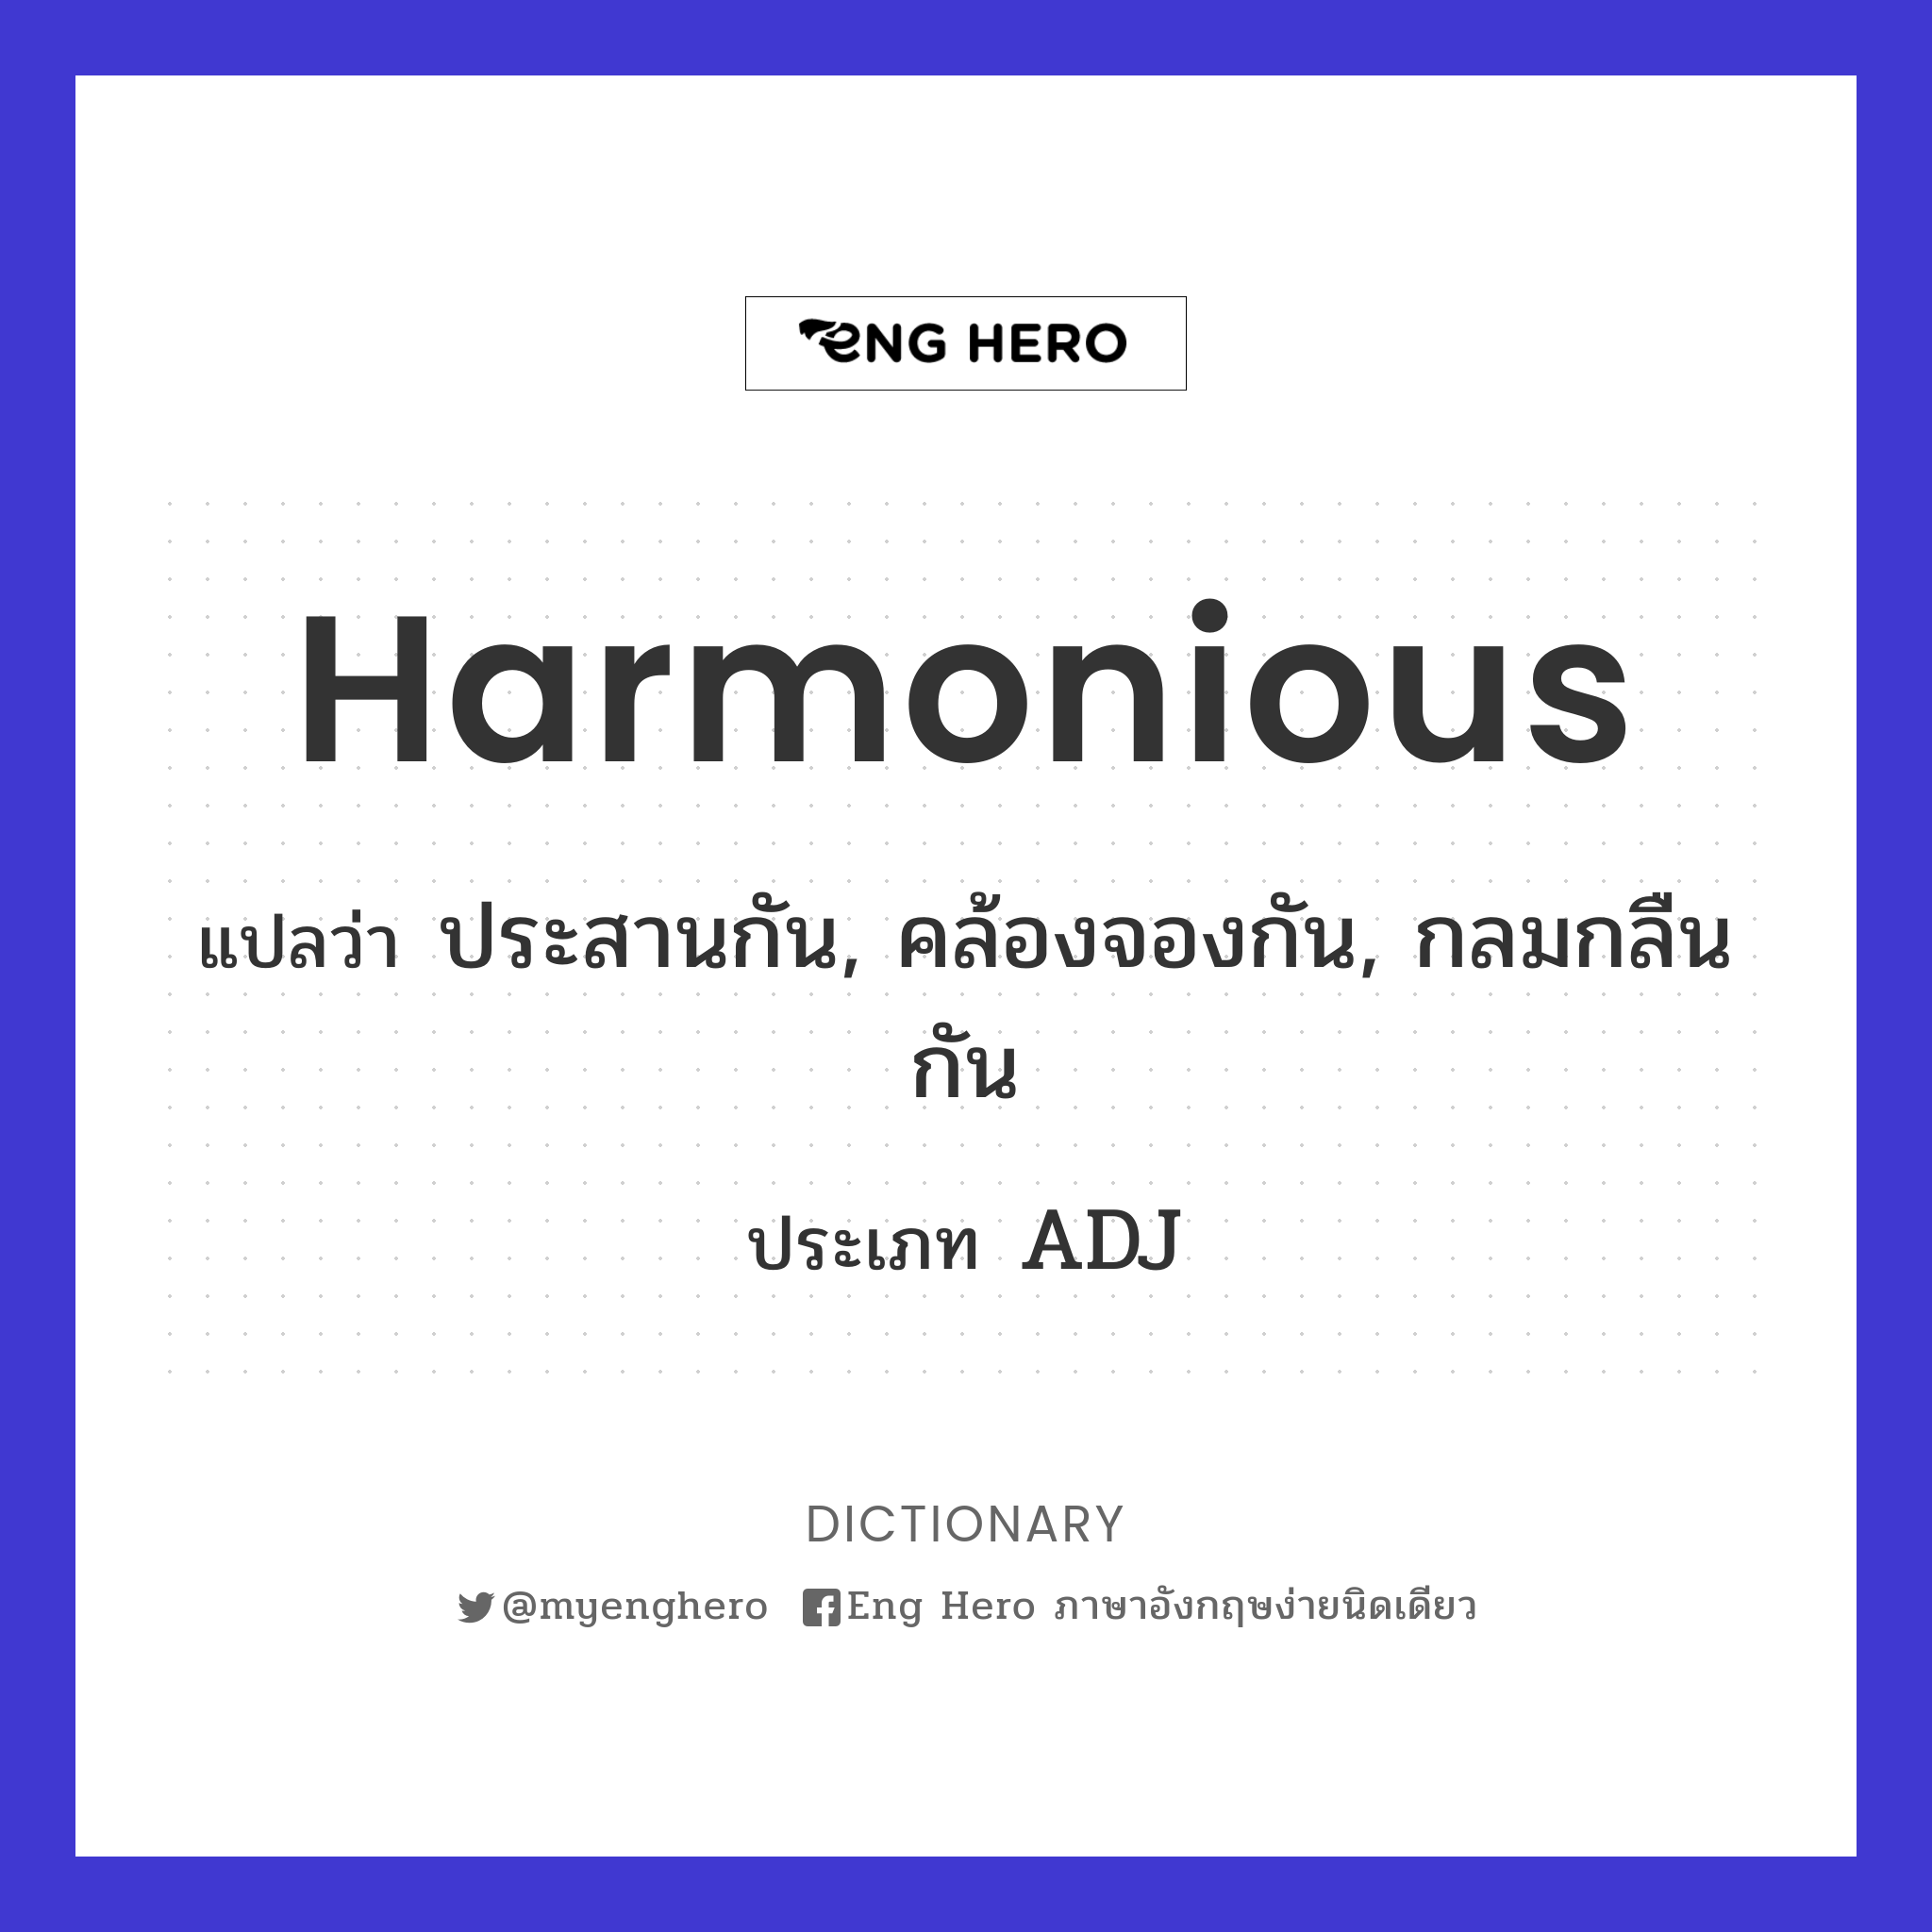 harmonious